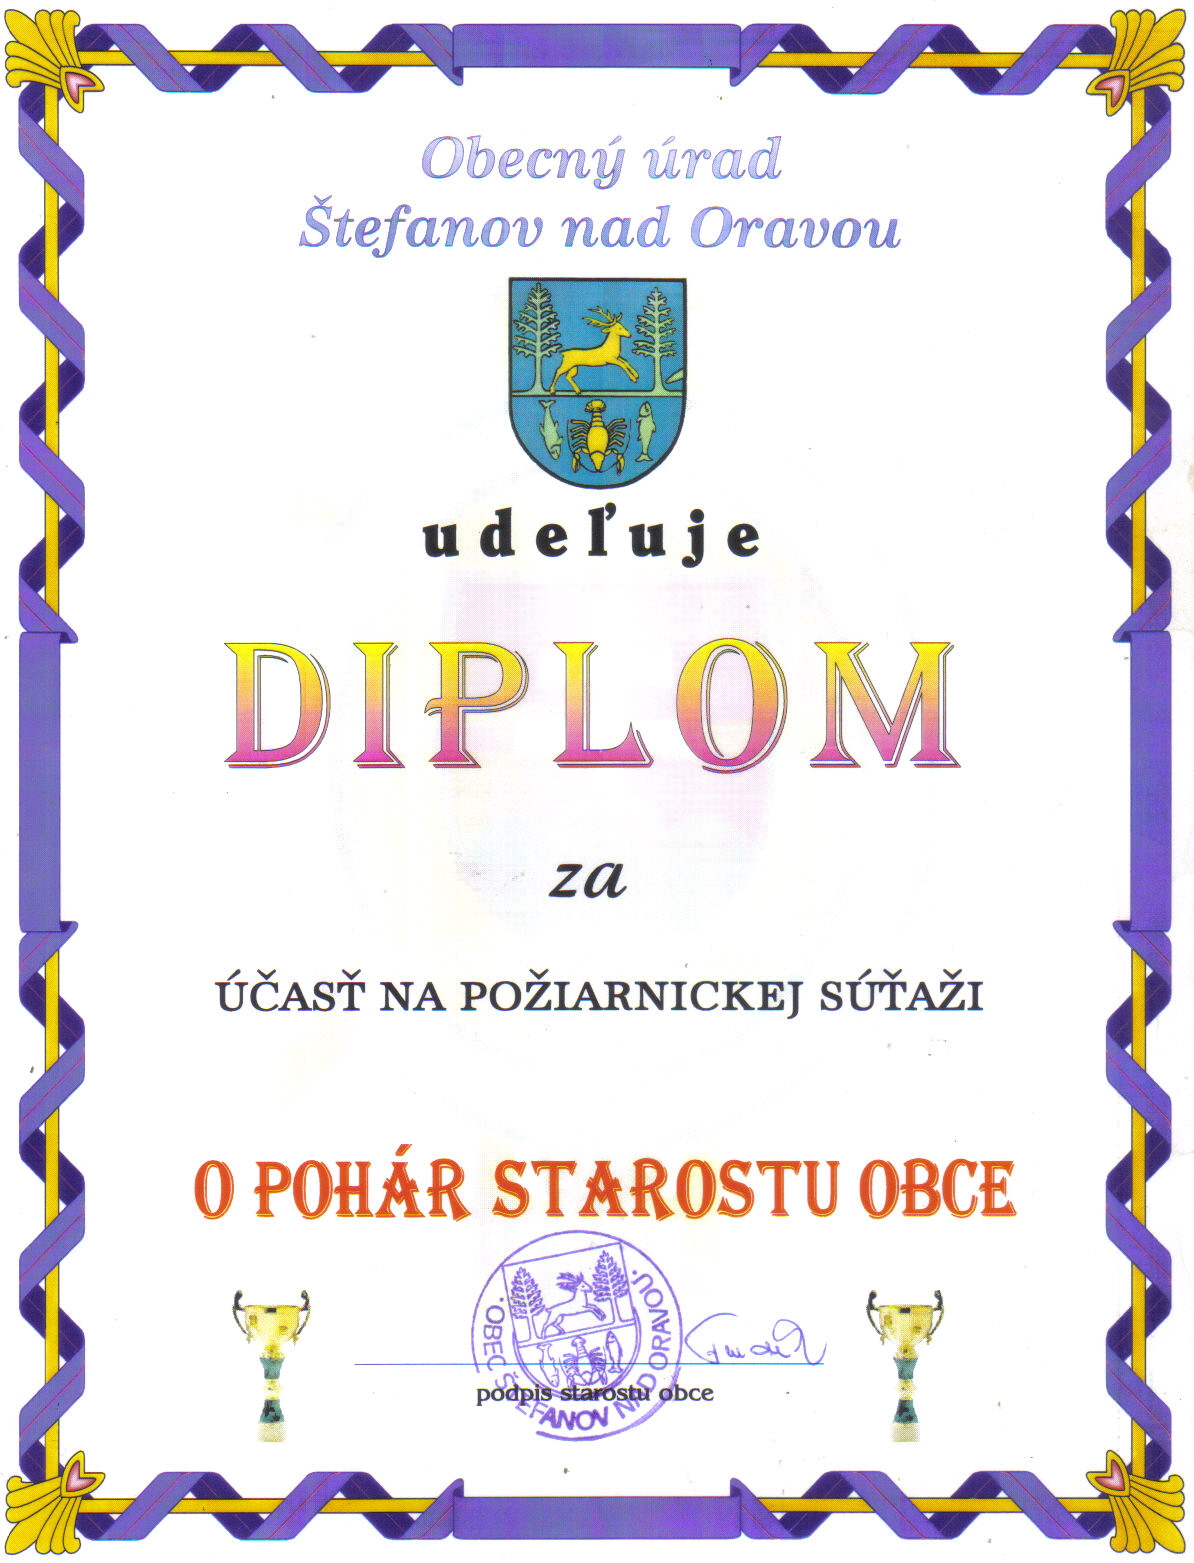 DiplomStefanov1